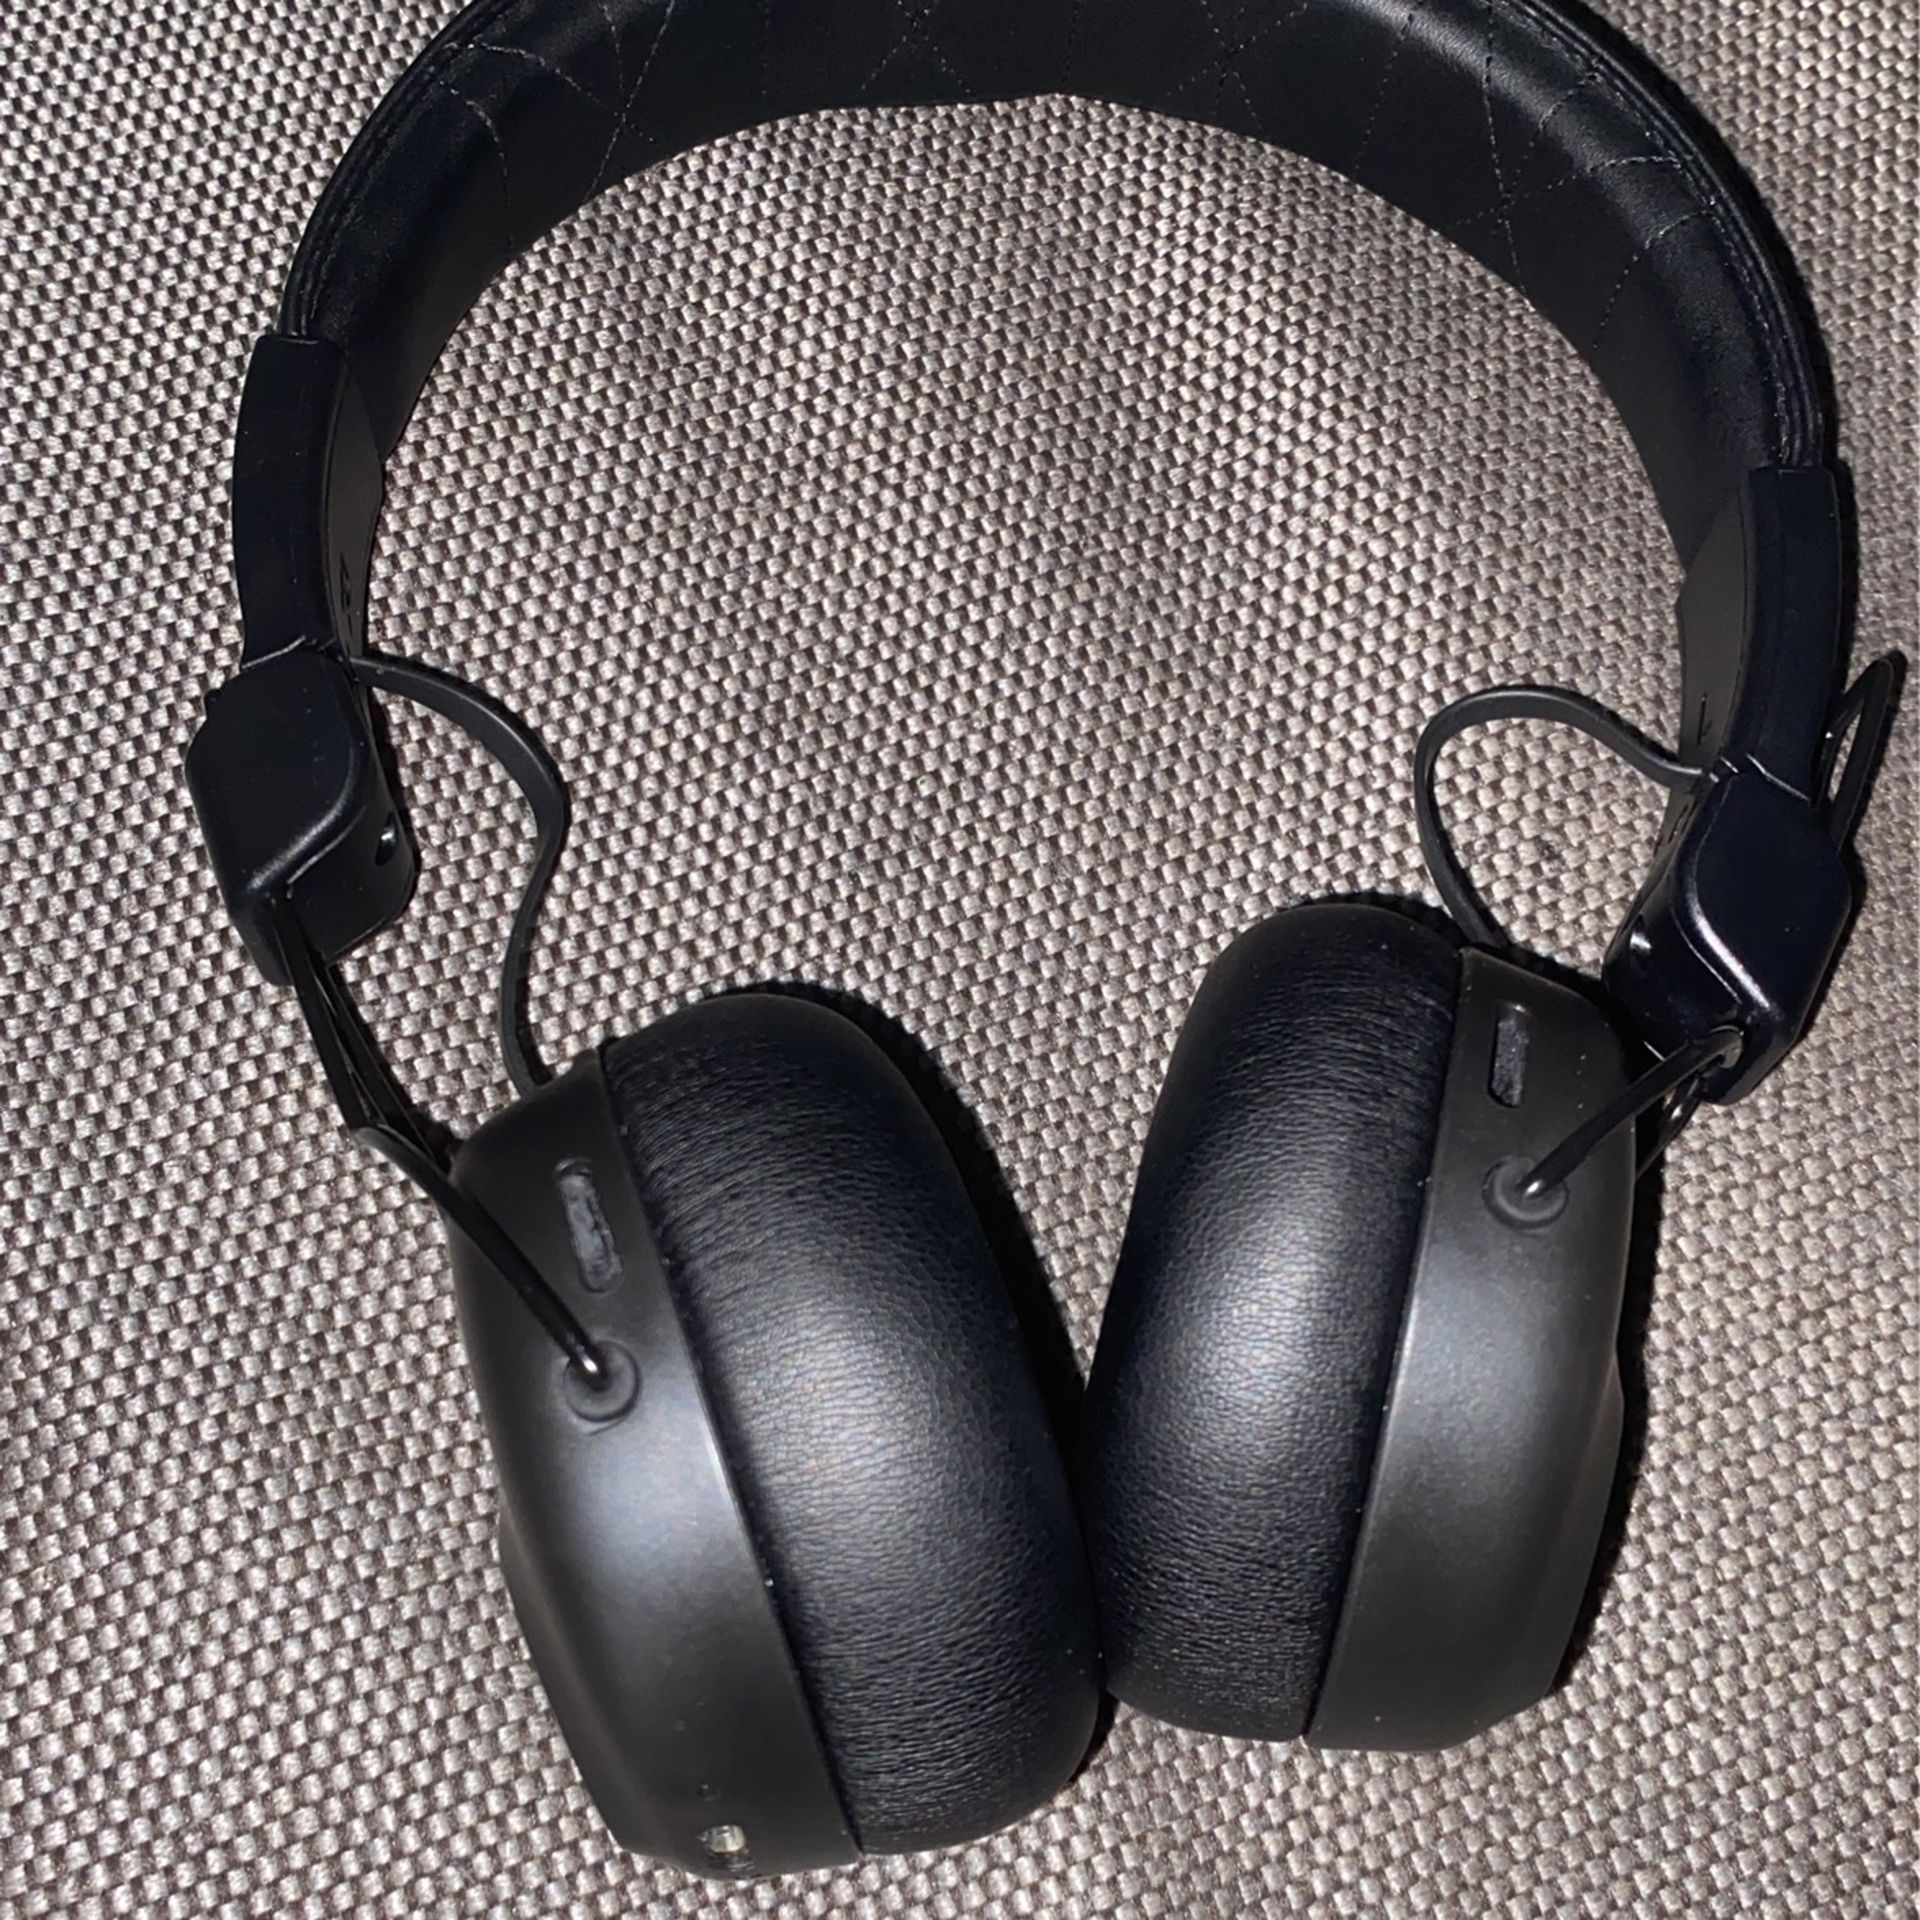 Jlab Wireless headphones 